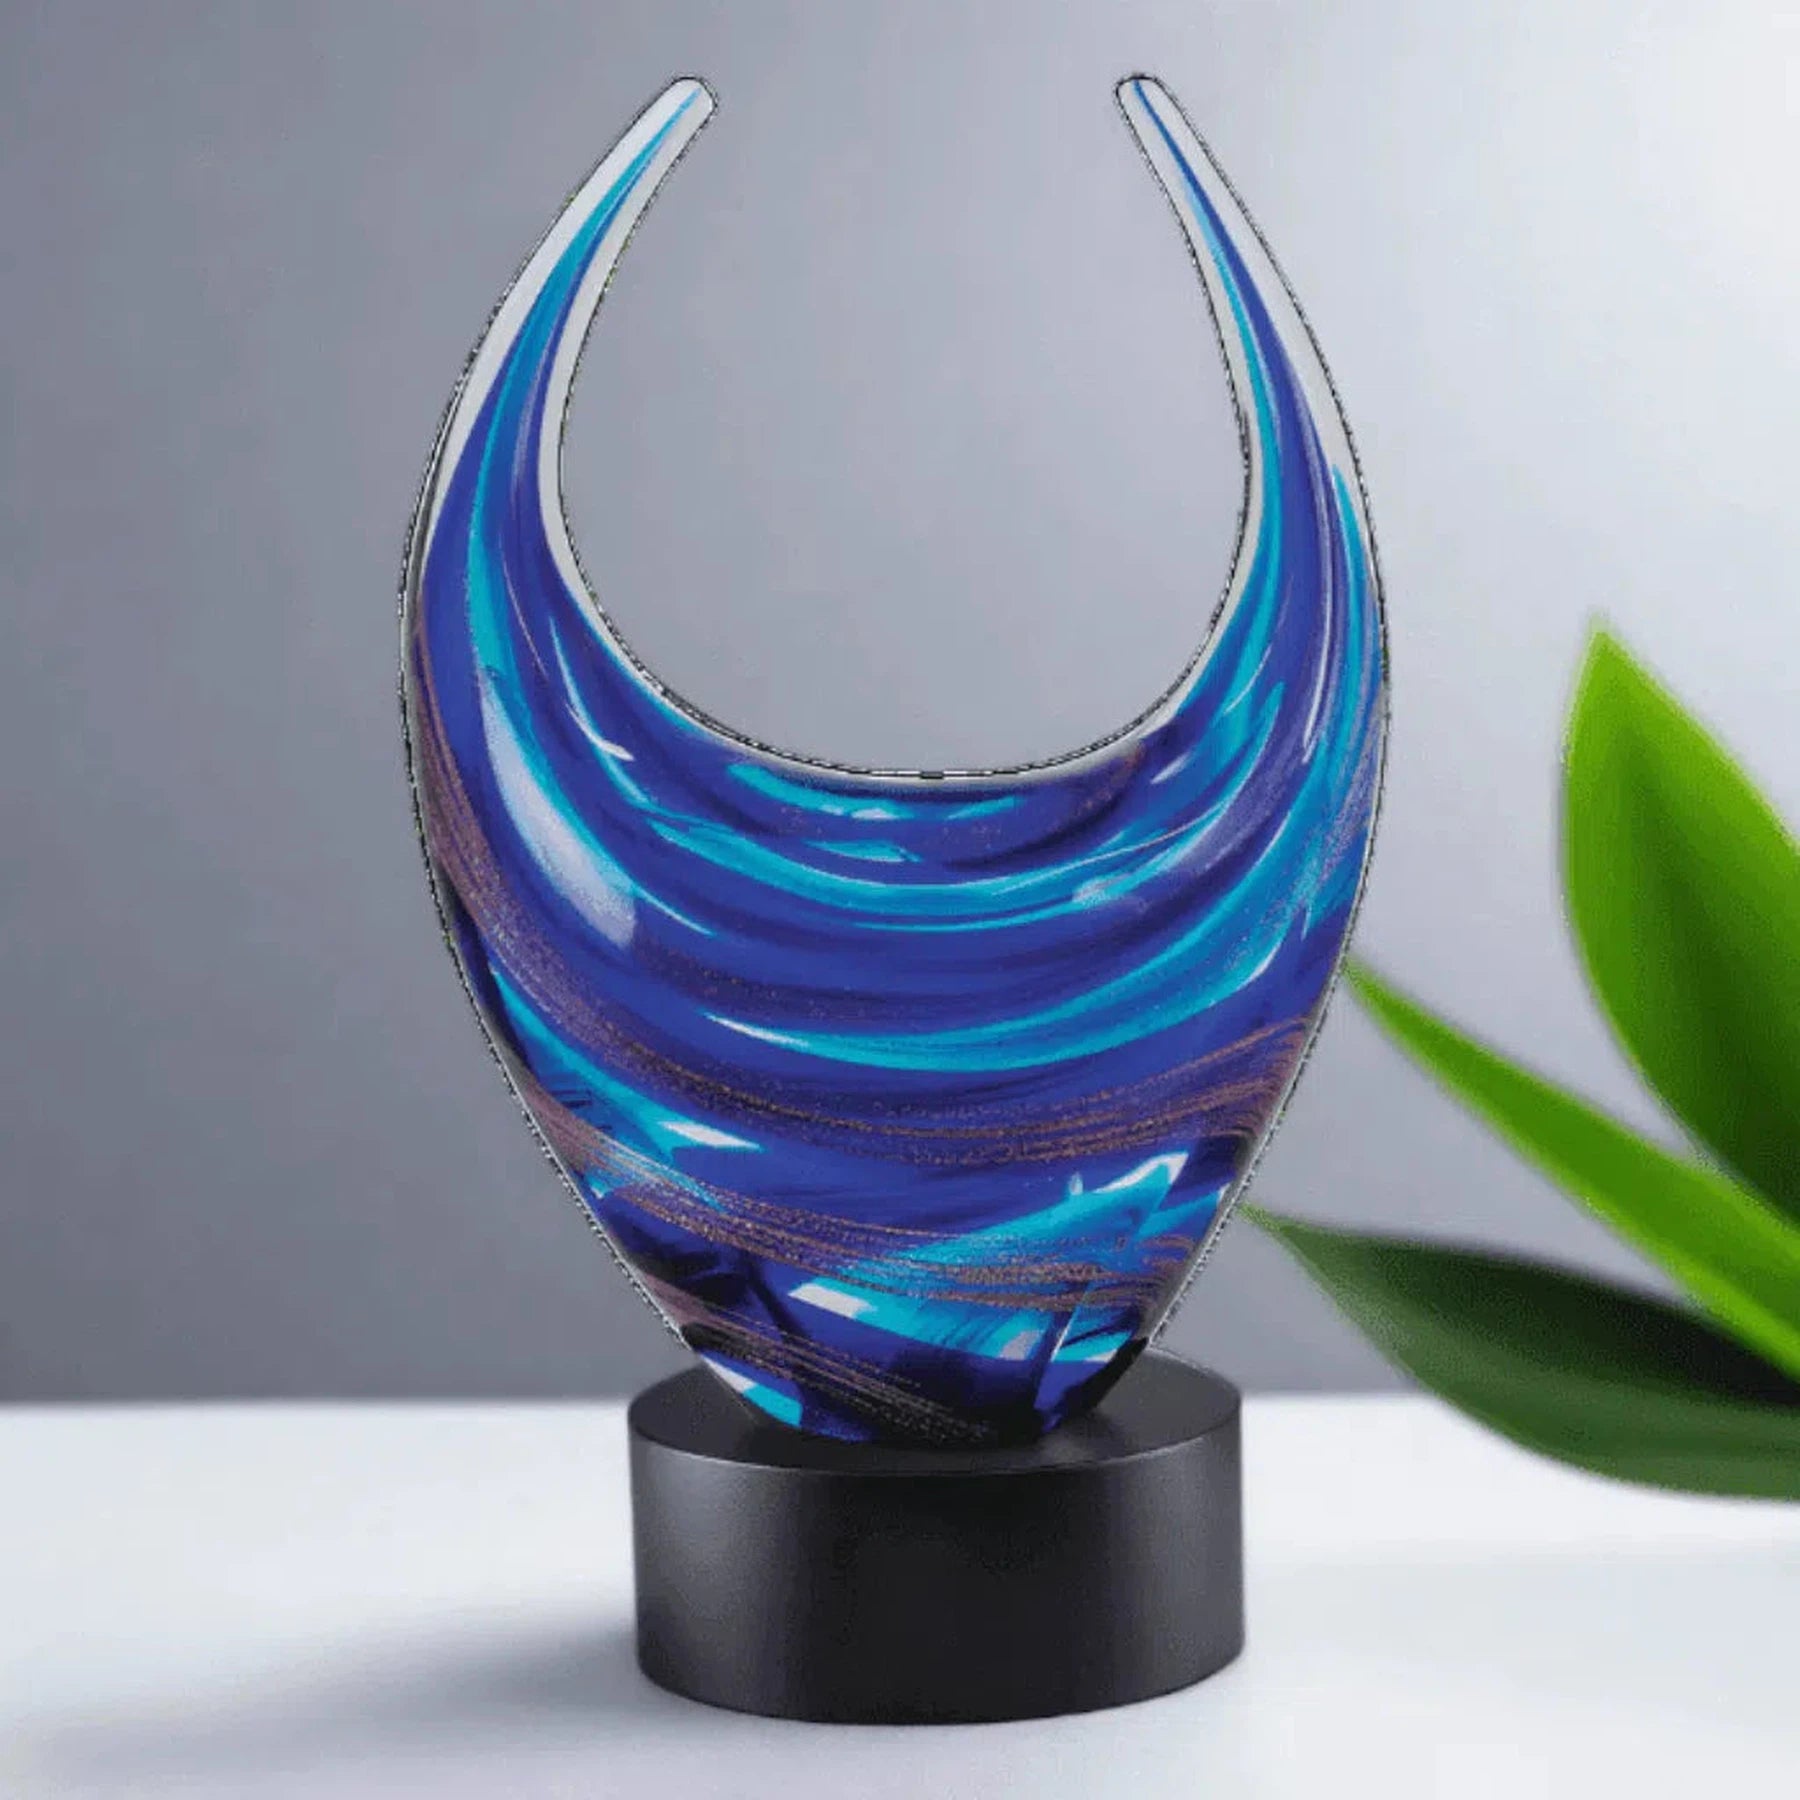 12" Blue and Gold Dual Rising Art Glass Award Sculpture